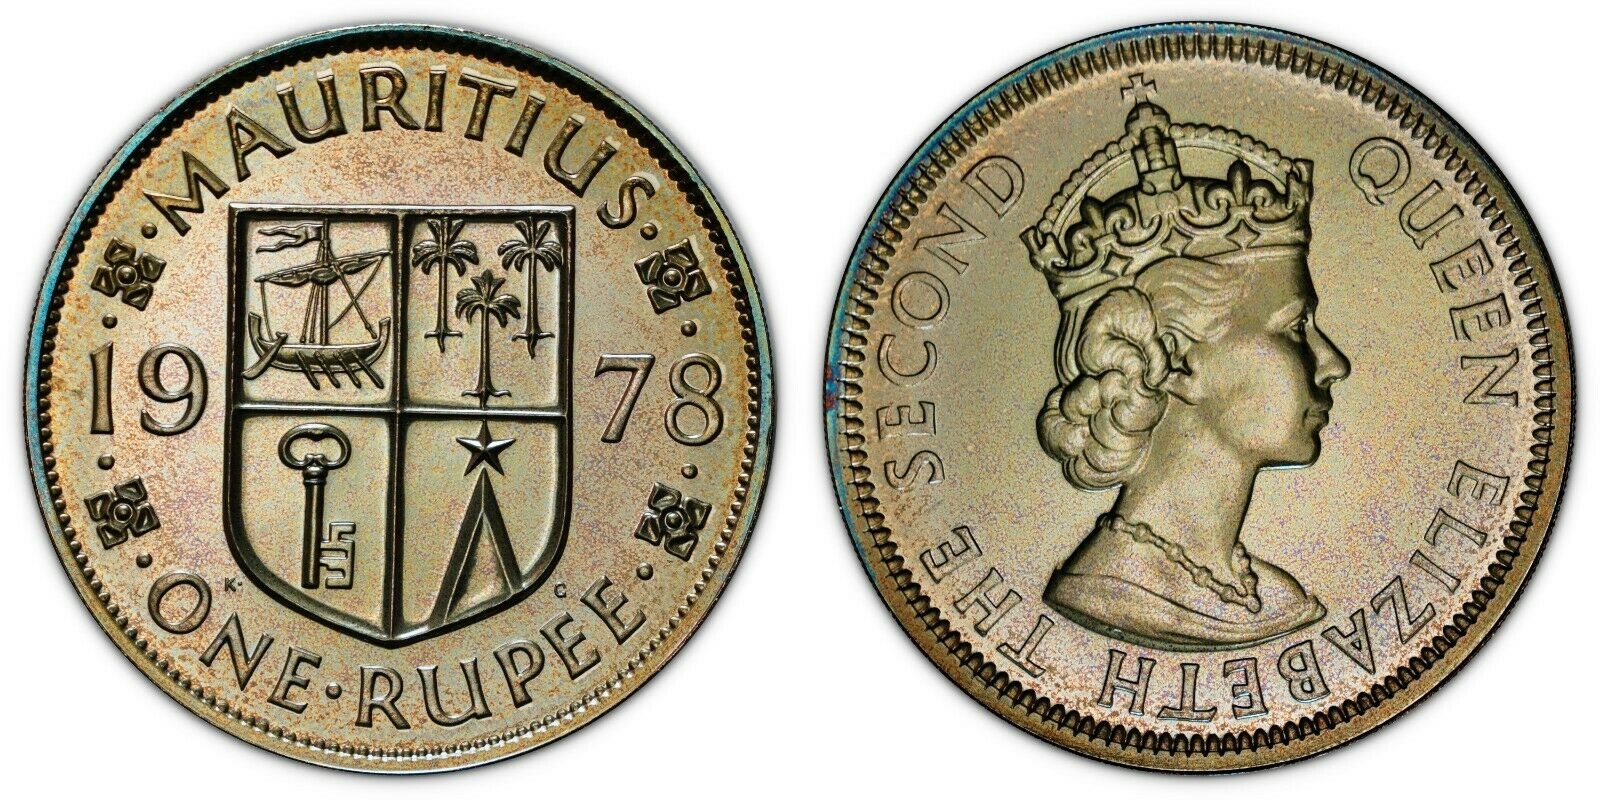 Mauritius Rupee 1978 (choice Proof) *light Original Mint Set Toning*